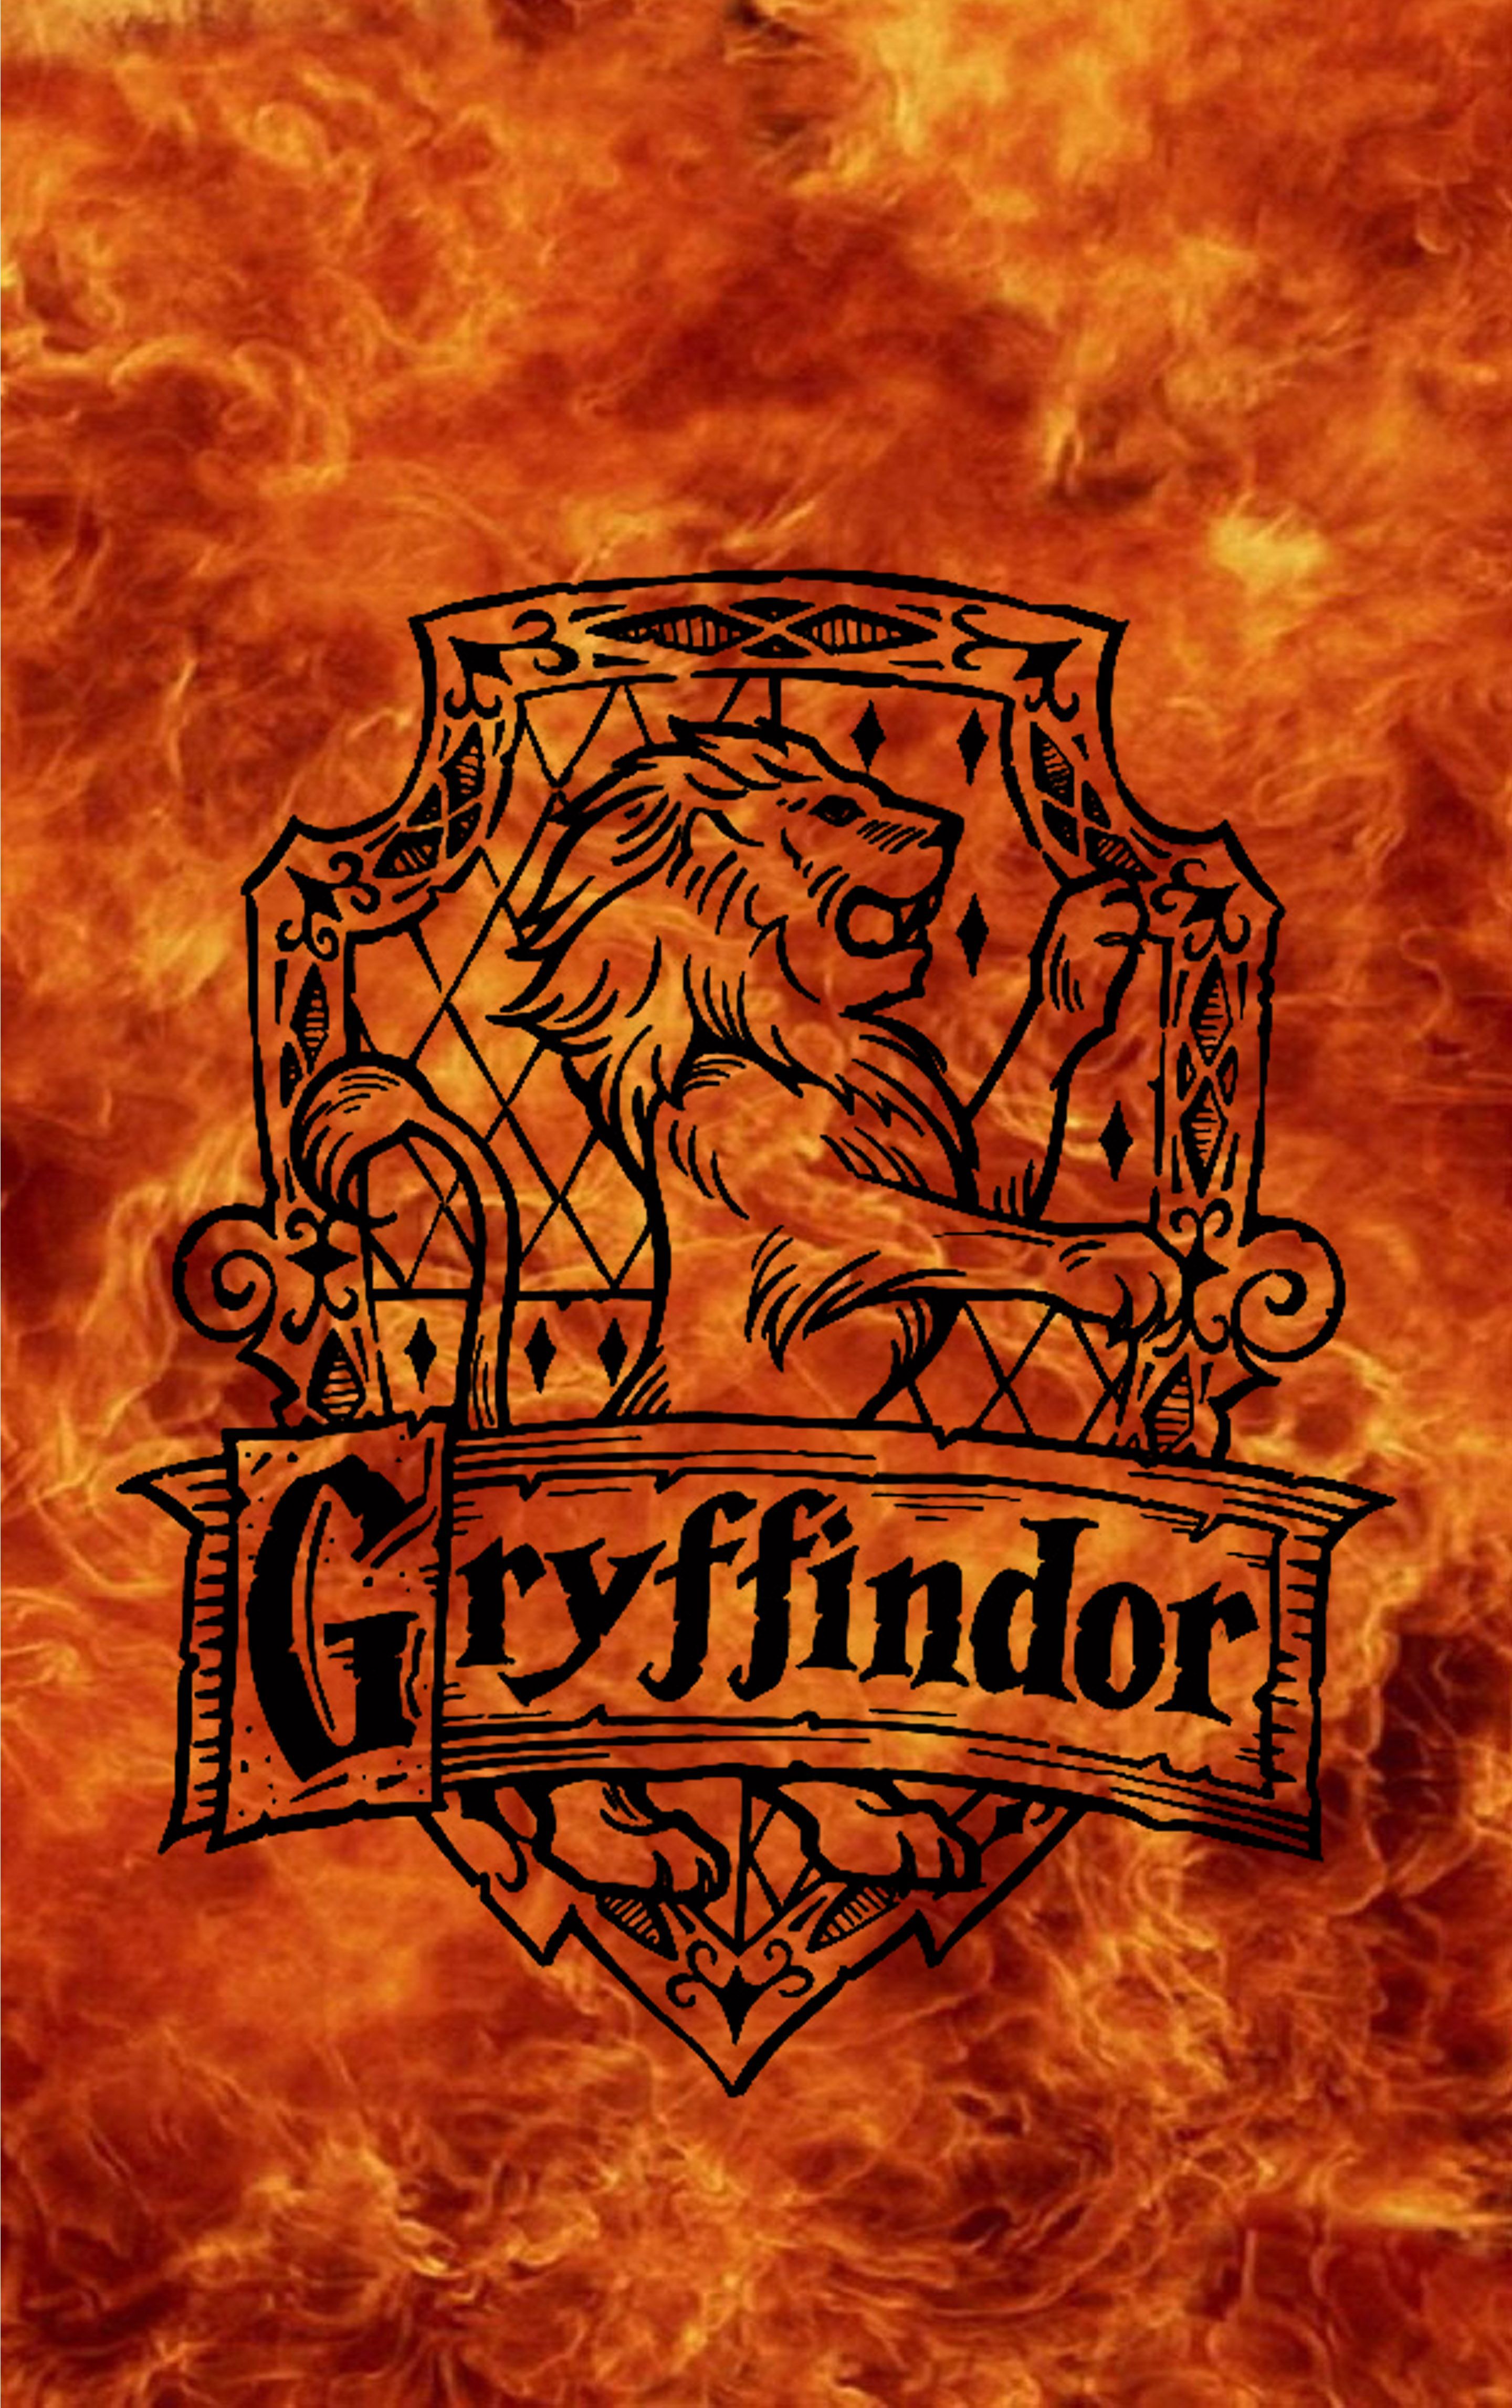 Gryffindor phone wallpaper background. Harry potter wallpaper, Harry potter art, Harry potter